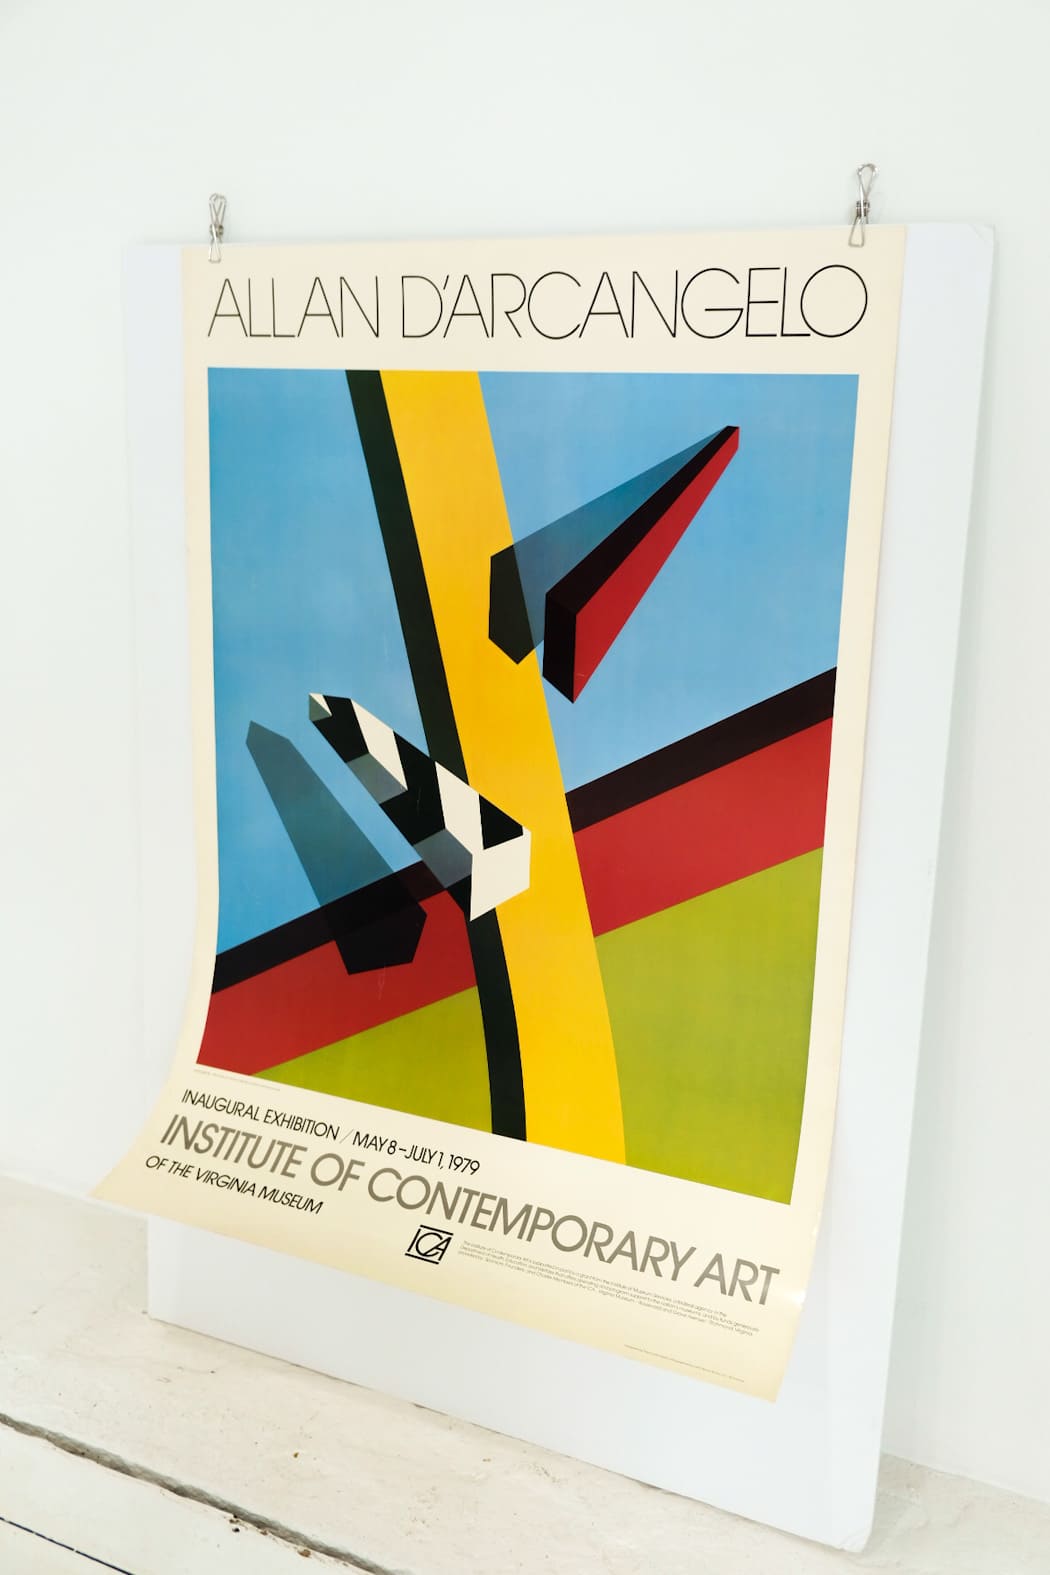 Allan D'Arcangelo Landscape 1979